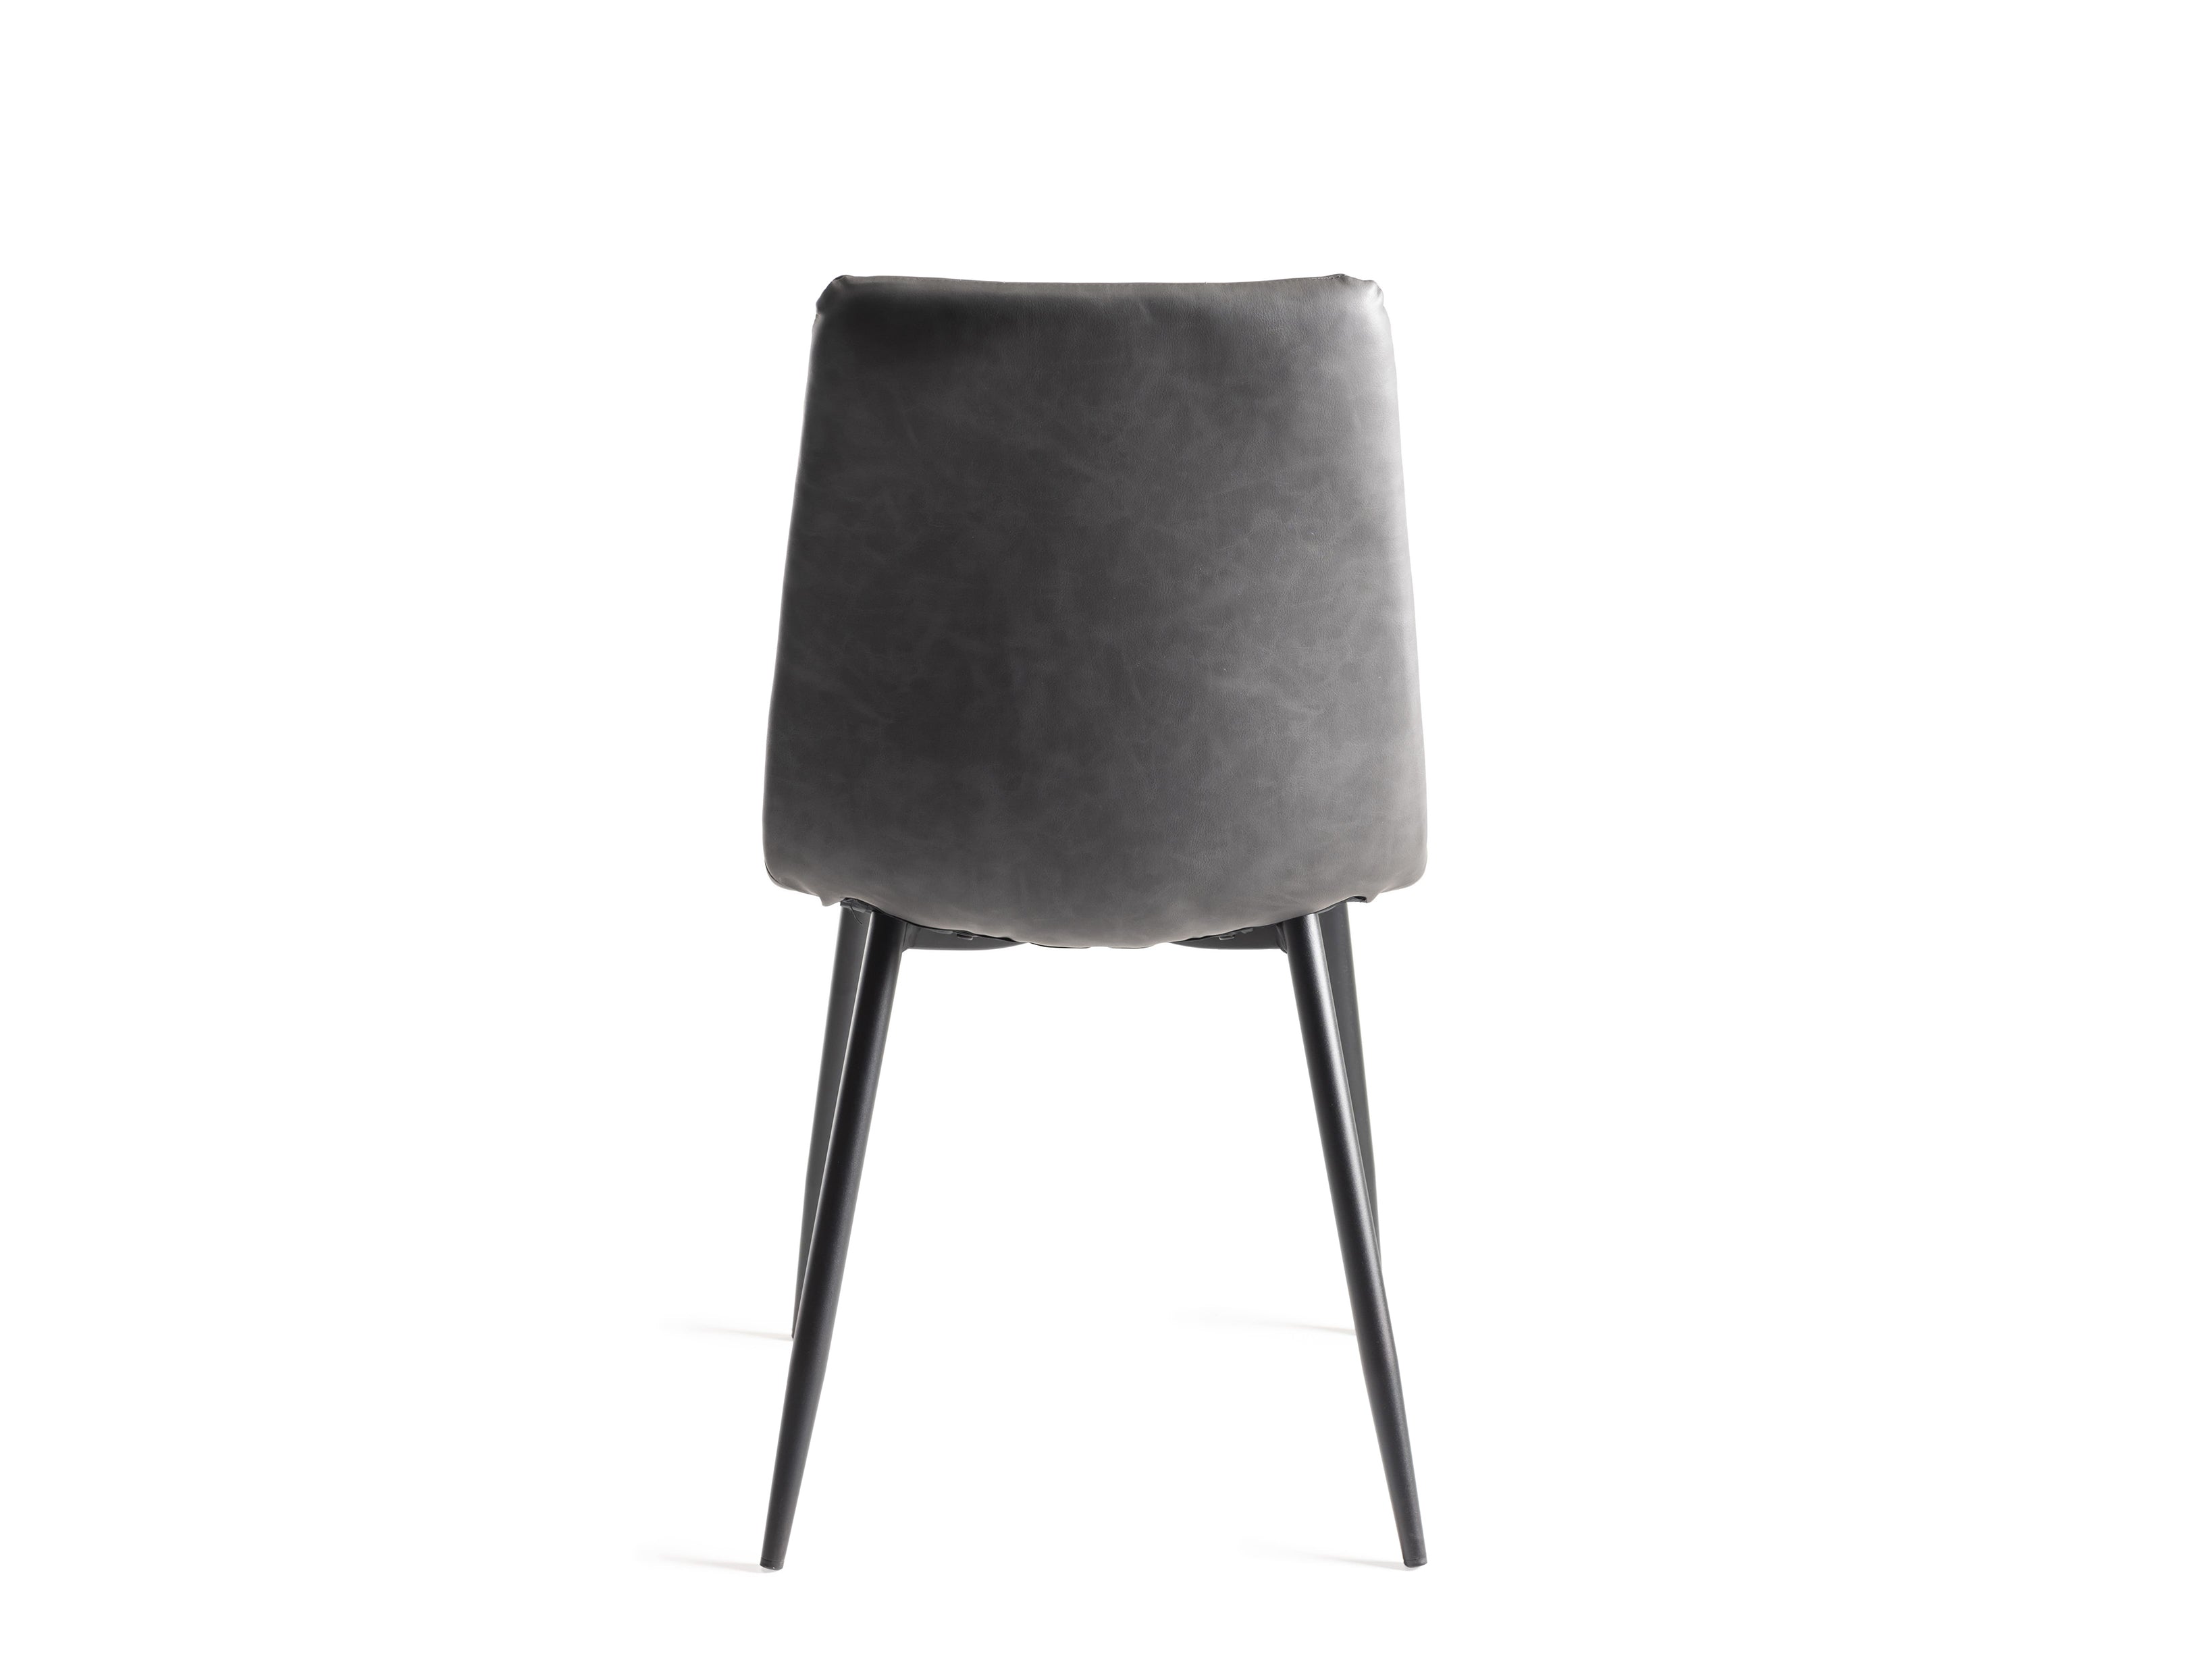 Tenna Dining Chairs (Pair) Grey